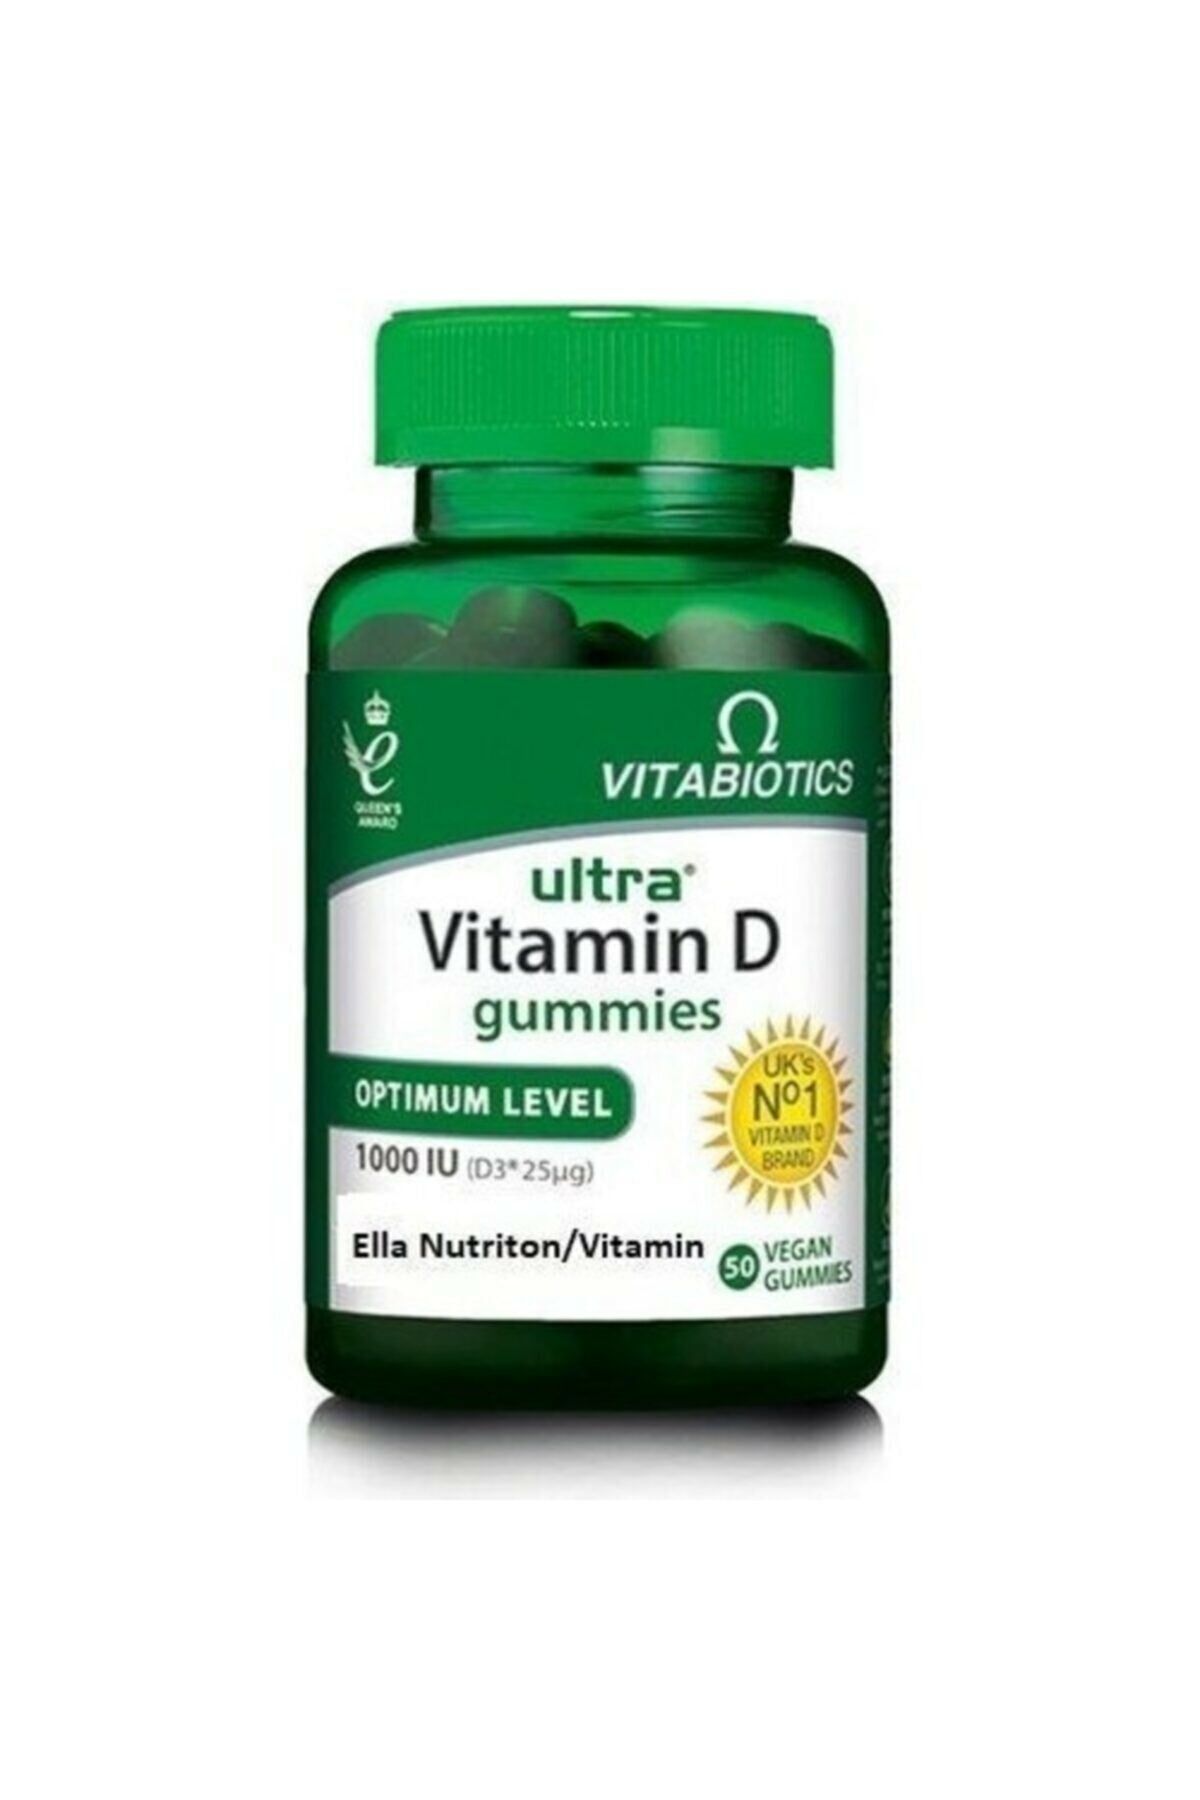 Vitabiotics Ultra Vitamin D Gummies  1000 IU 50 Vegan Gummies